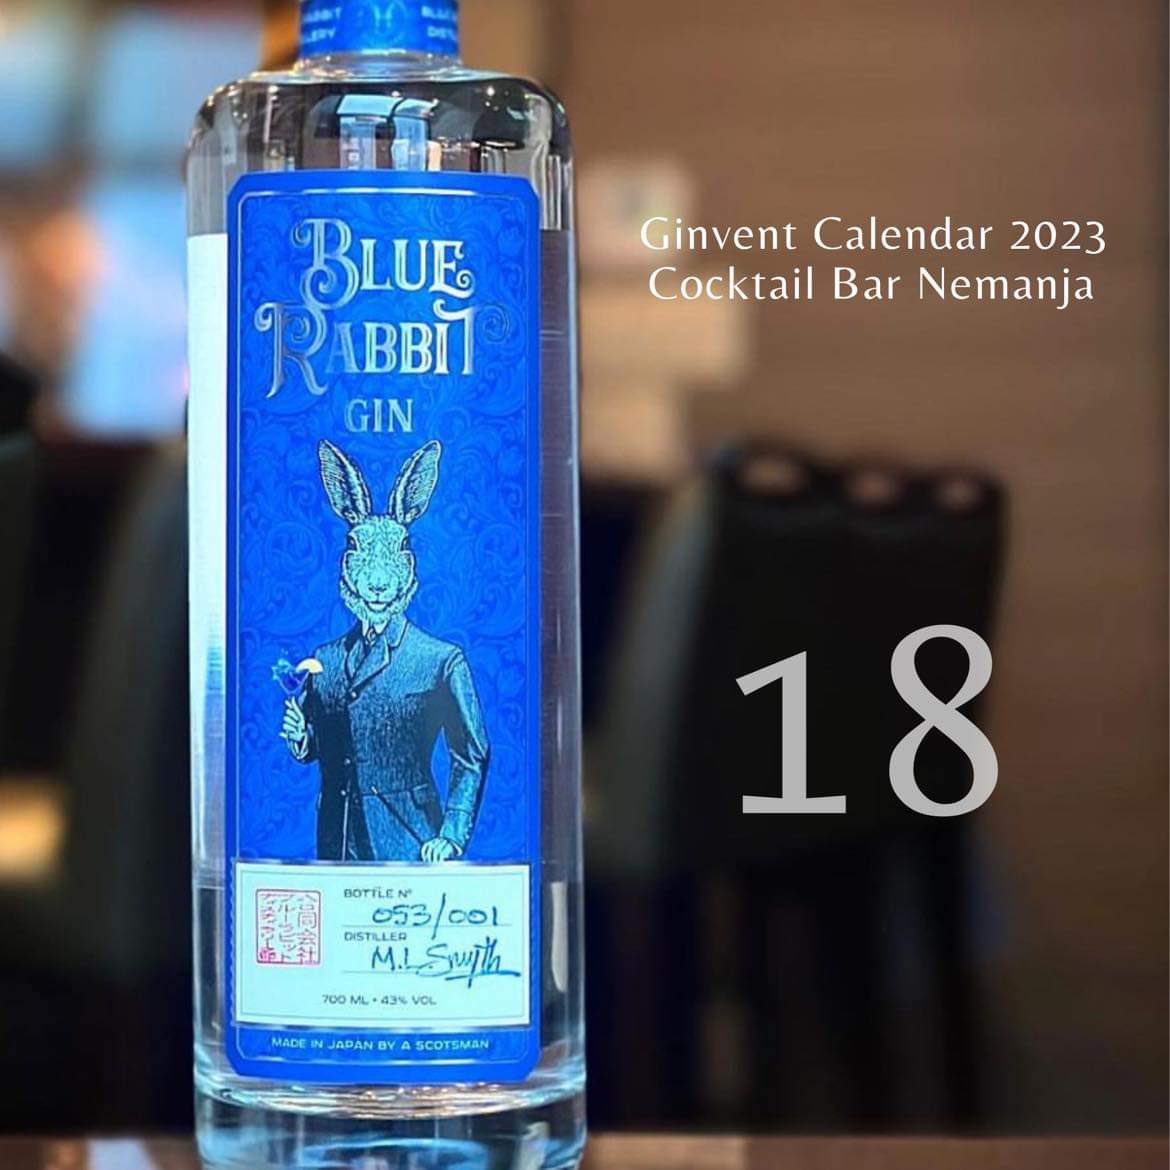 Ginvent Calendar 2023
Cocktail Bar Nemanja

ジンベントカレンダー2023
カクテルバー・ネマニャ